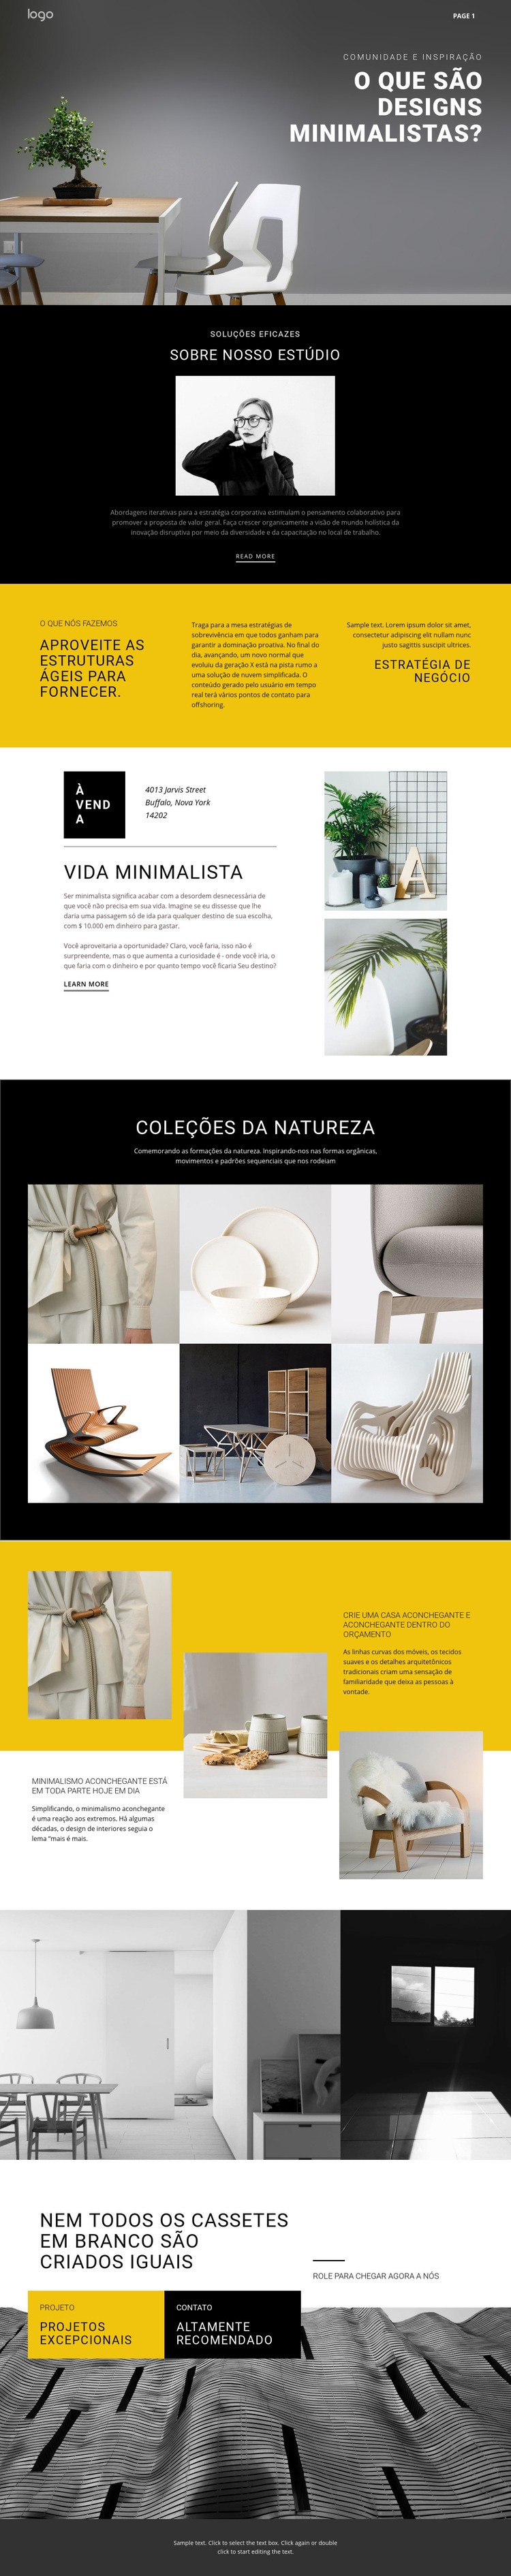 Design de interiores minimalista Maquete do site